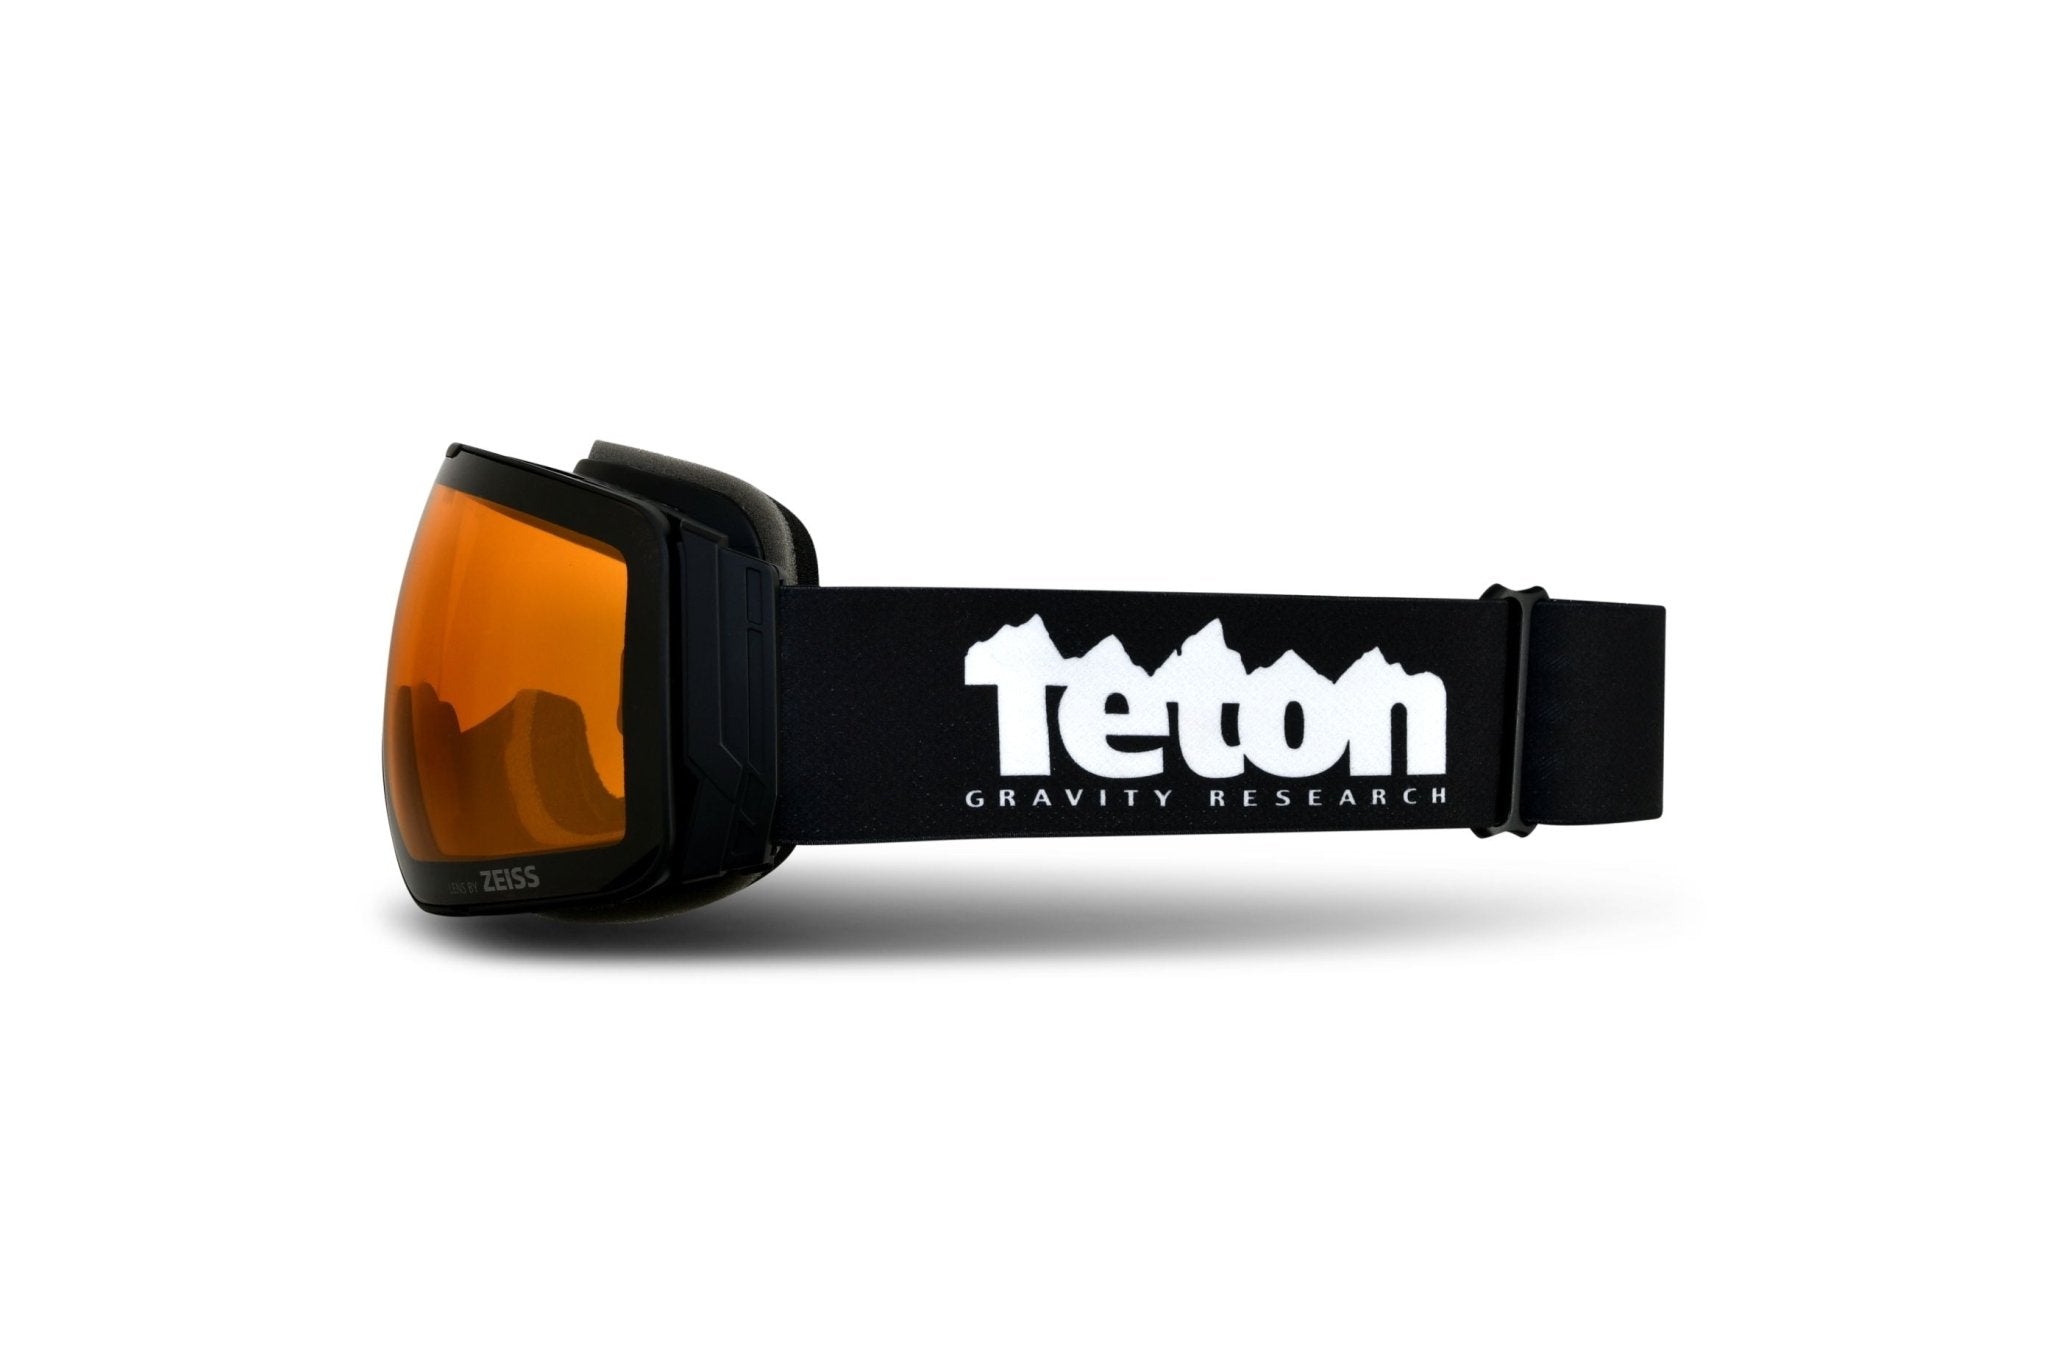 Deeper Toric Goggles - Powder Day Lowlight Edition - Teton Gravity Research. Black goggle strap with TGR logo